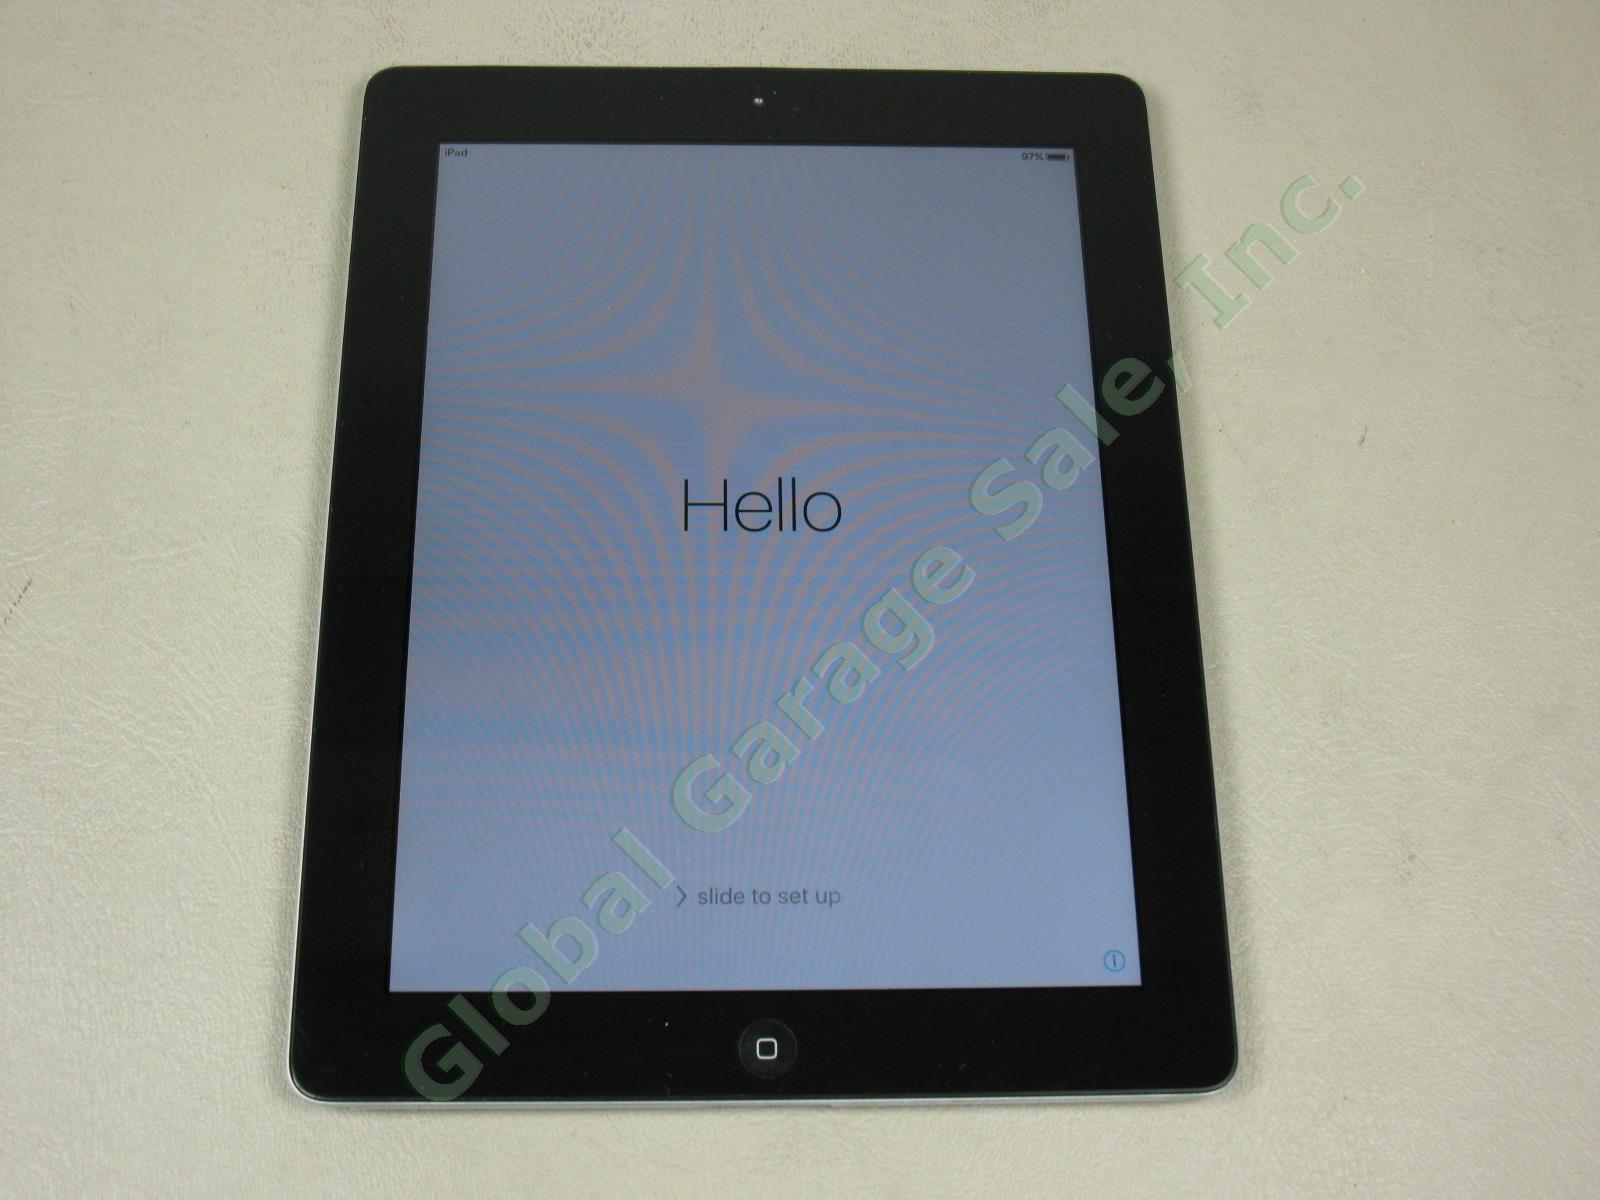 Apple iPad 2 Black Tablet 16GB Wifi Works Great Model MC770LL/A A1395 No Reserve